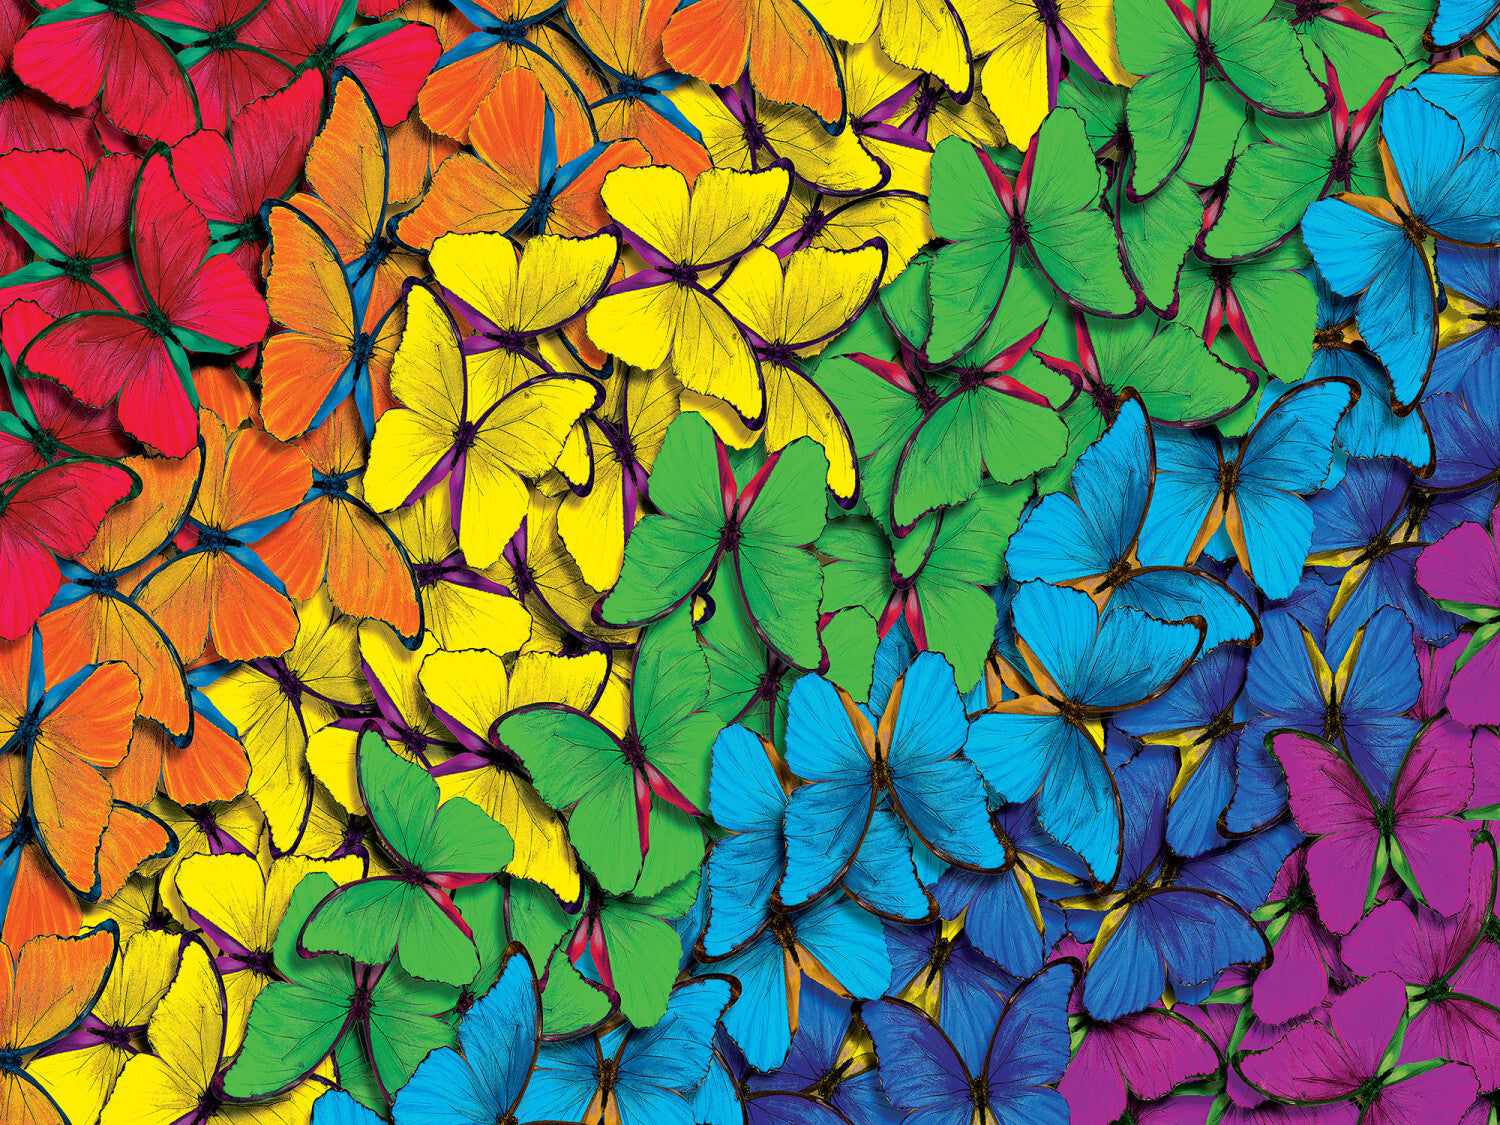 Brilliance - Fluttering Rainbow 550 Piece Puzzle